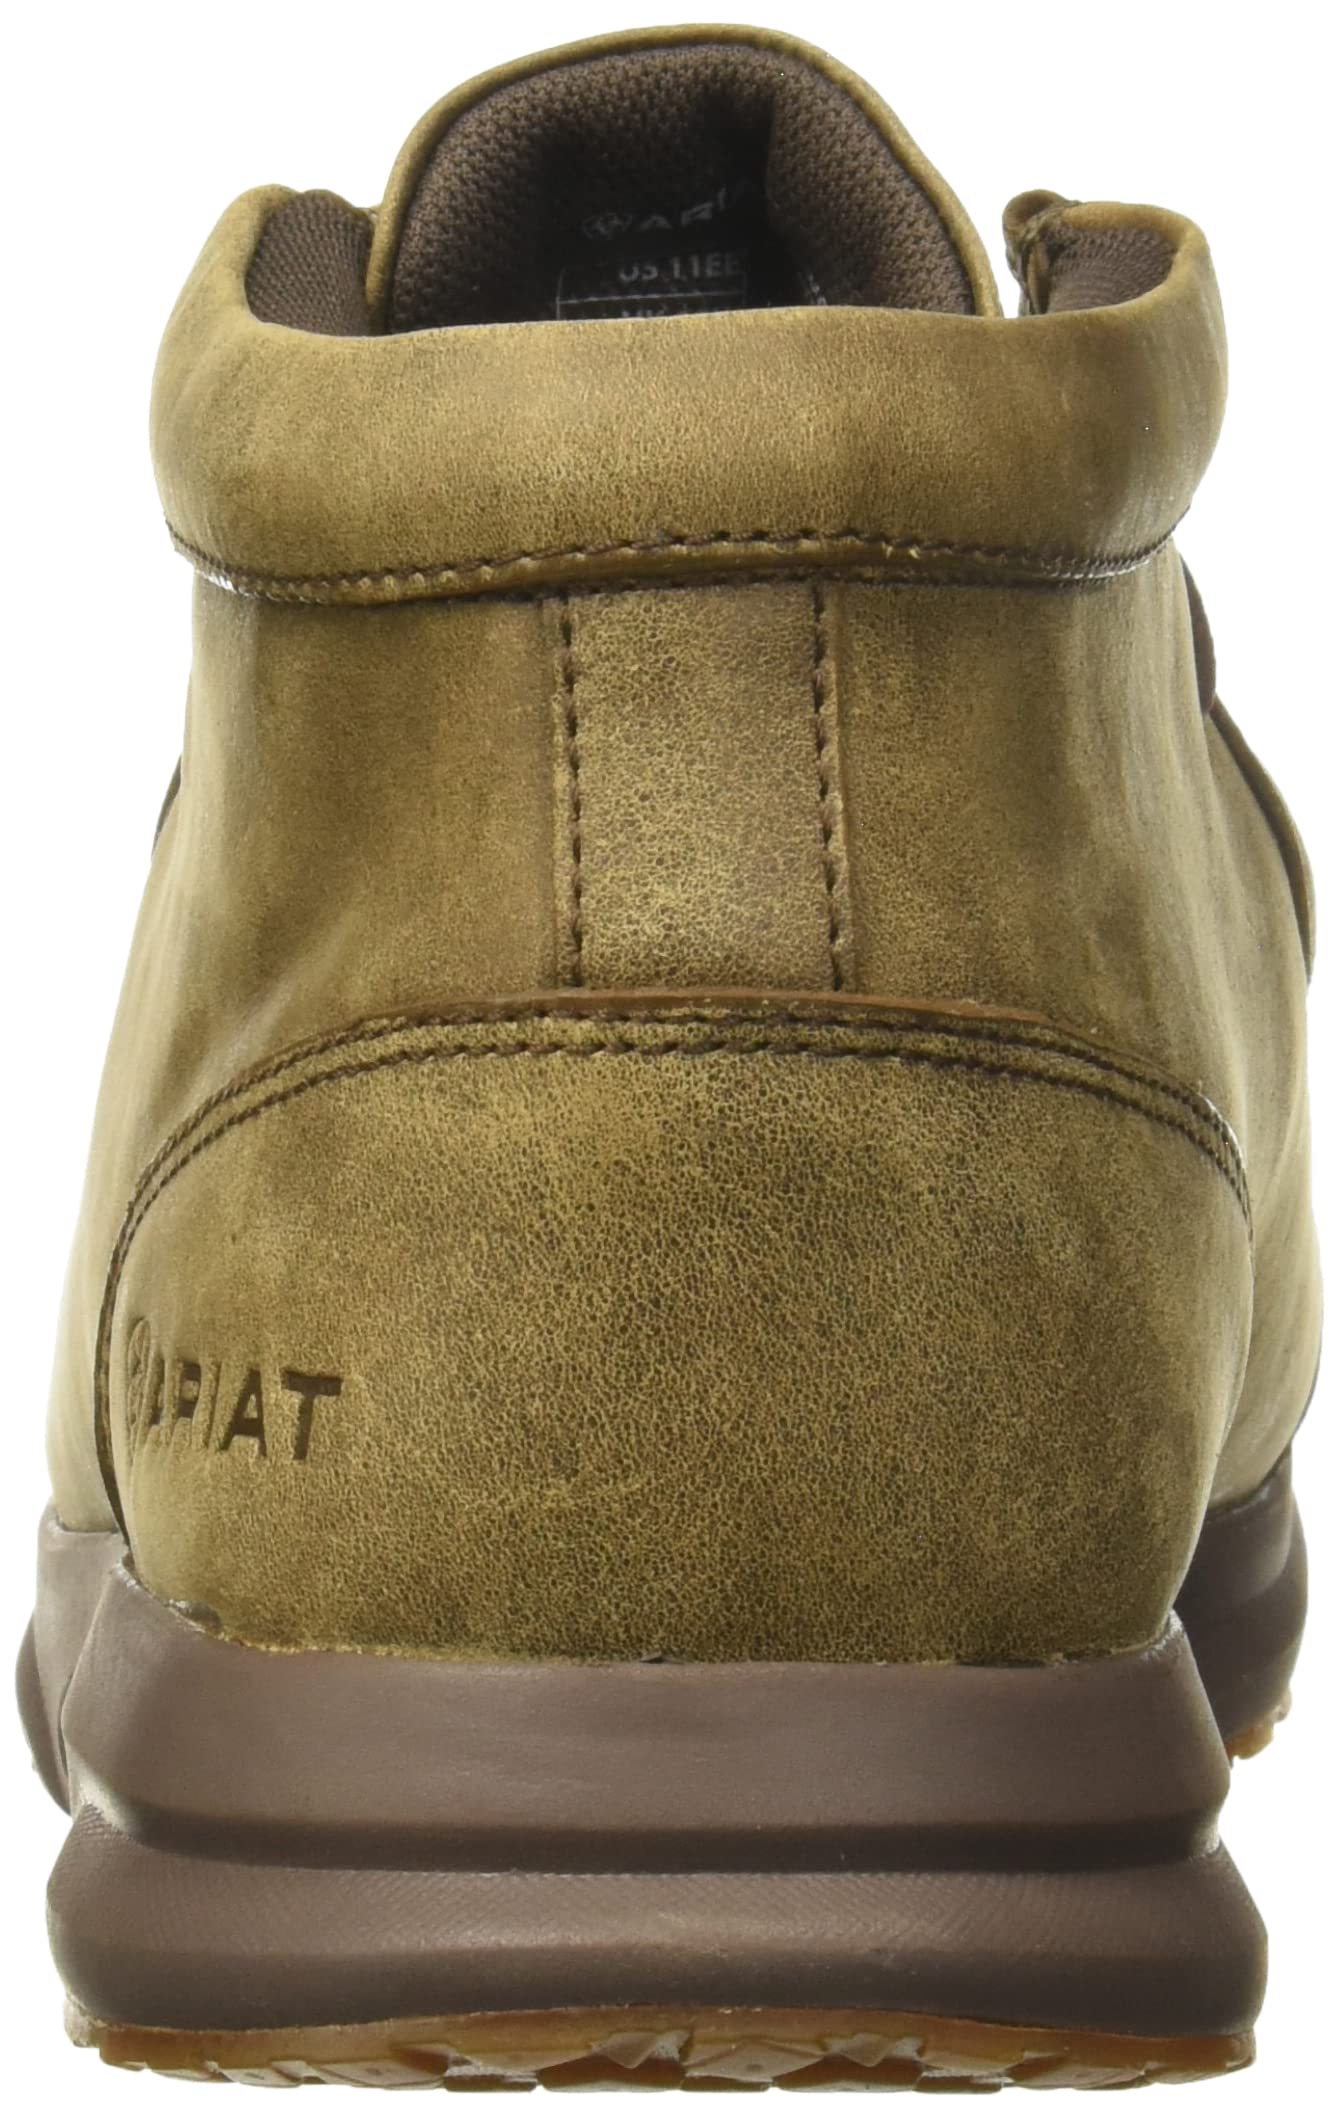 ARIAT Men's Spitfire Shoe Casual